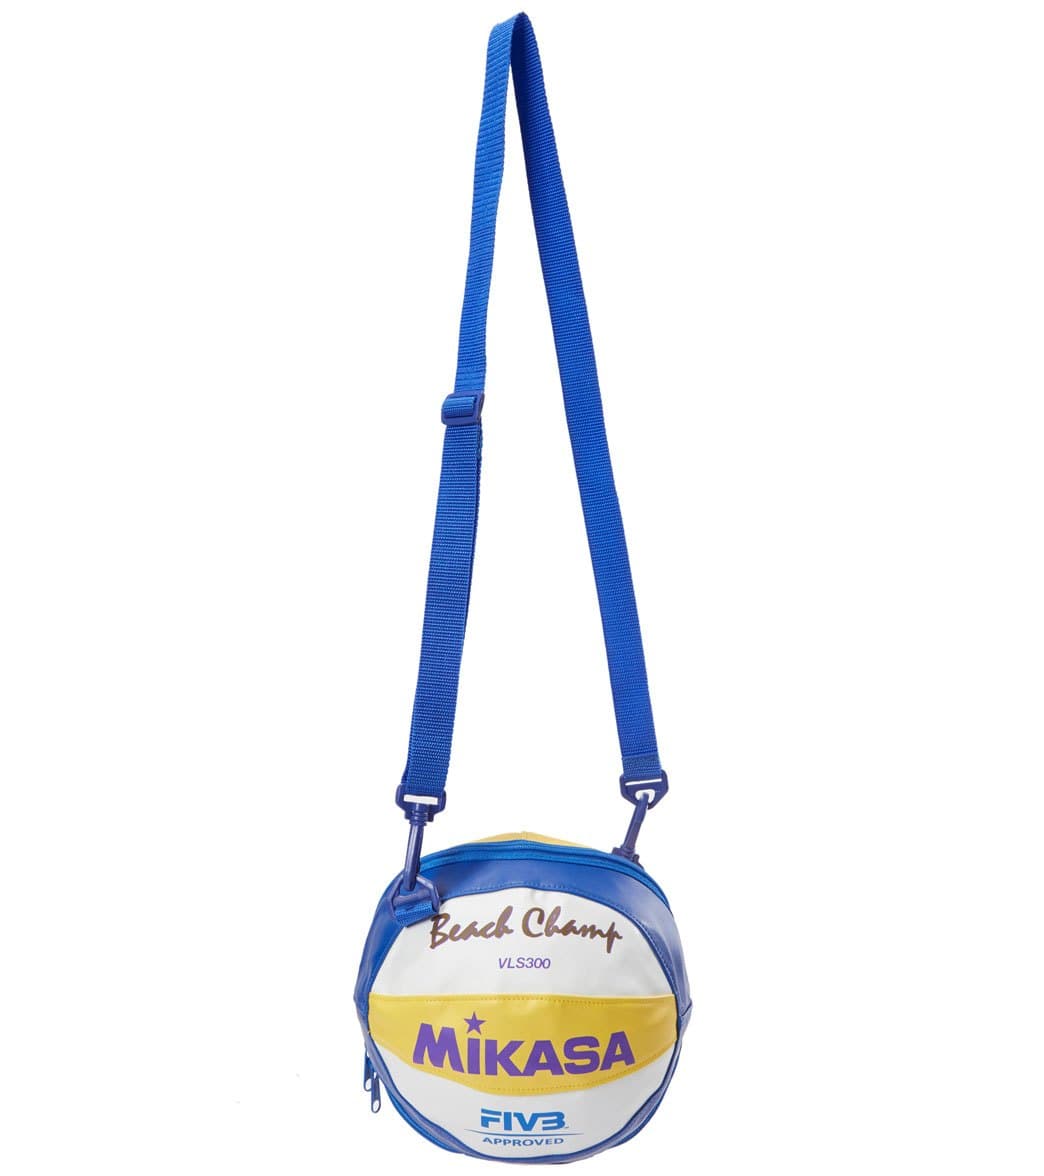 Mikasa Sports Usa One Ball Bag - Blue/White/Yellow - Swimoutlet.com